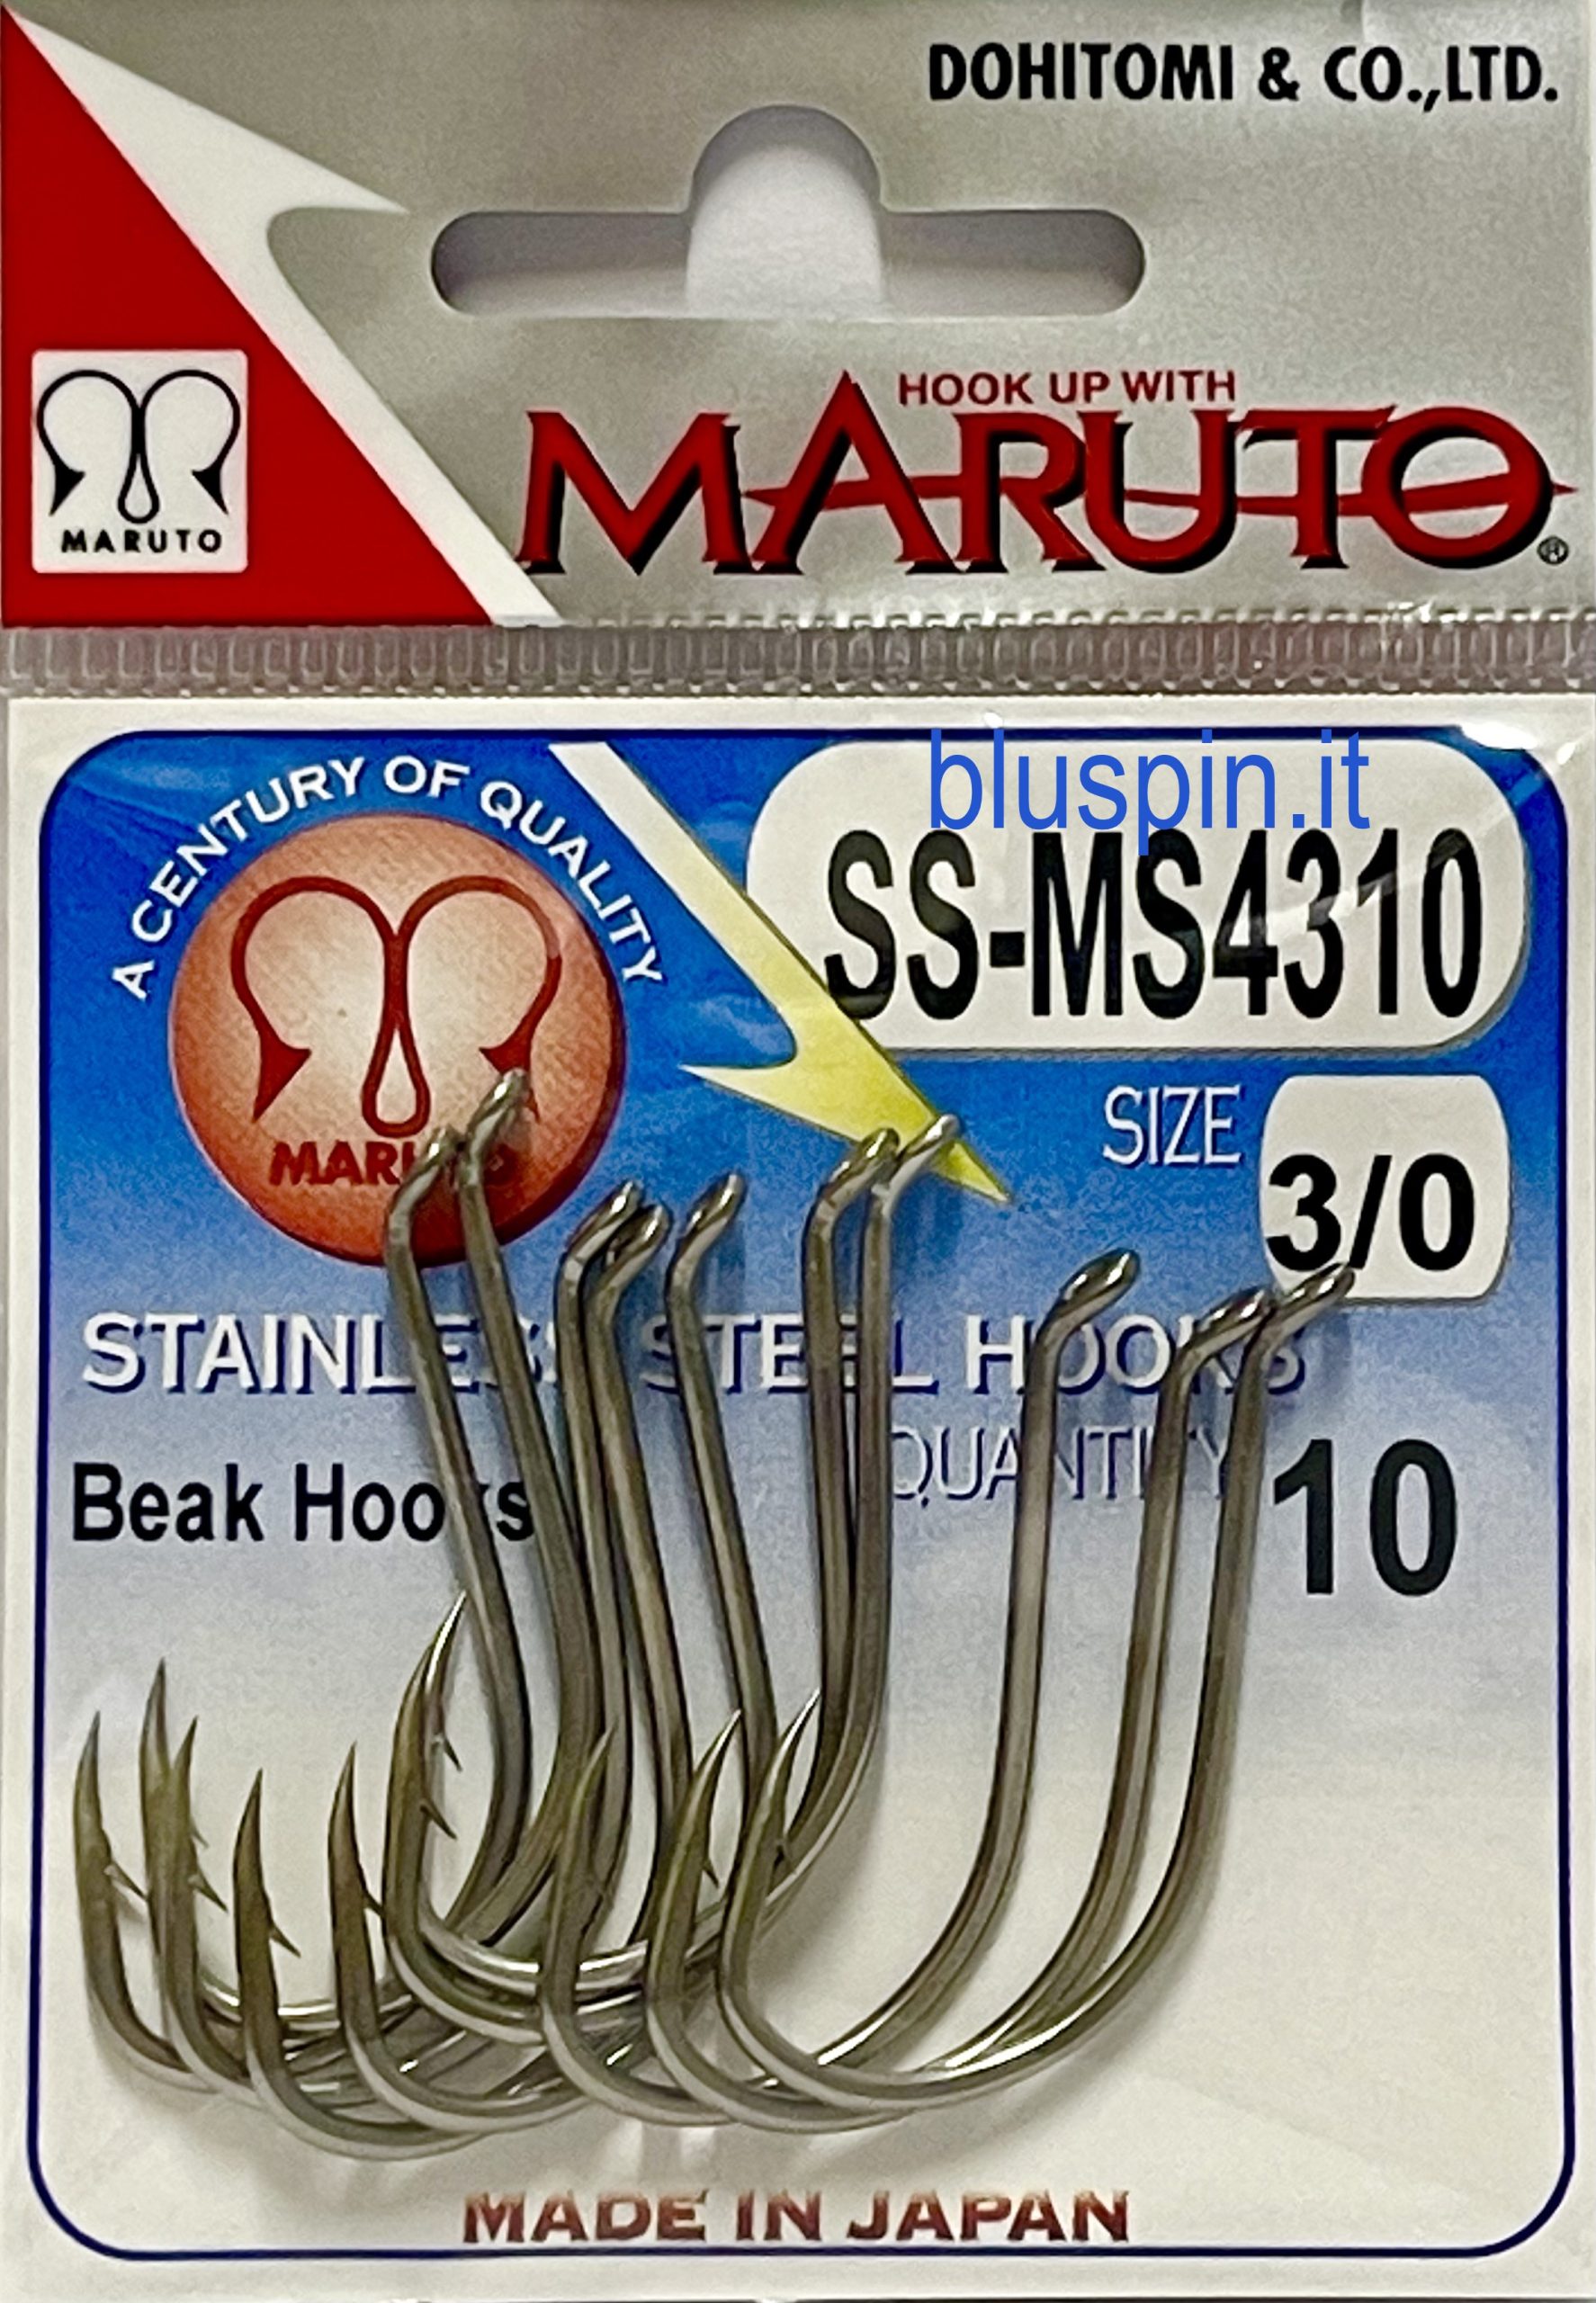 1pk Maruto TUTE SS4310 Stainless Steel Beak Fish Hooks Choose Size